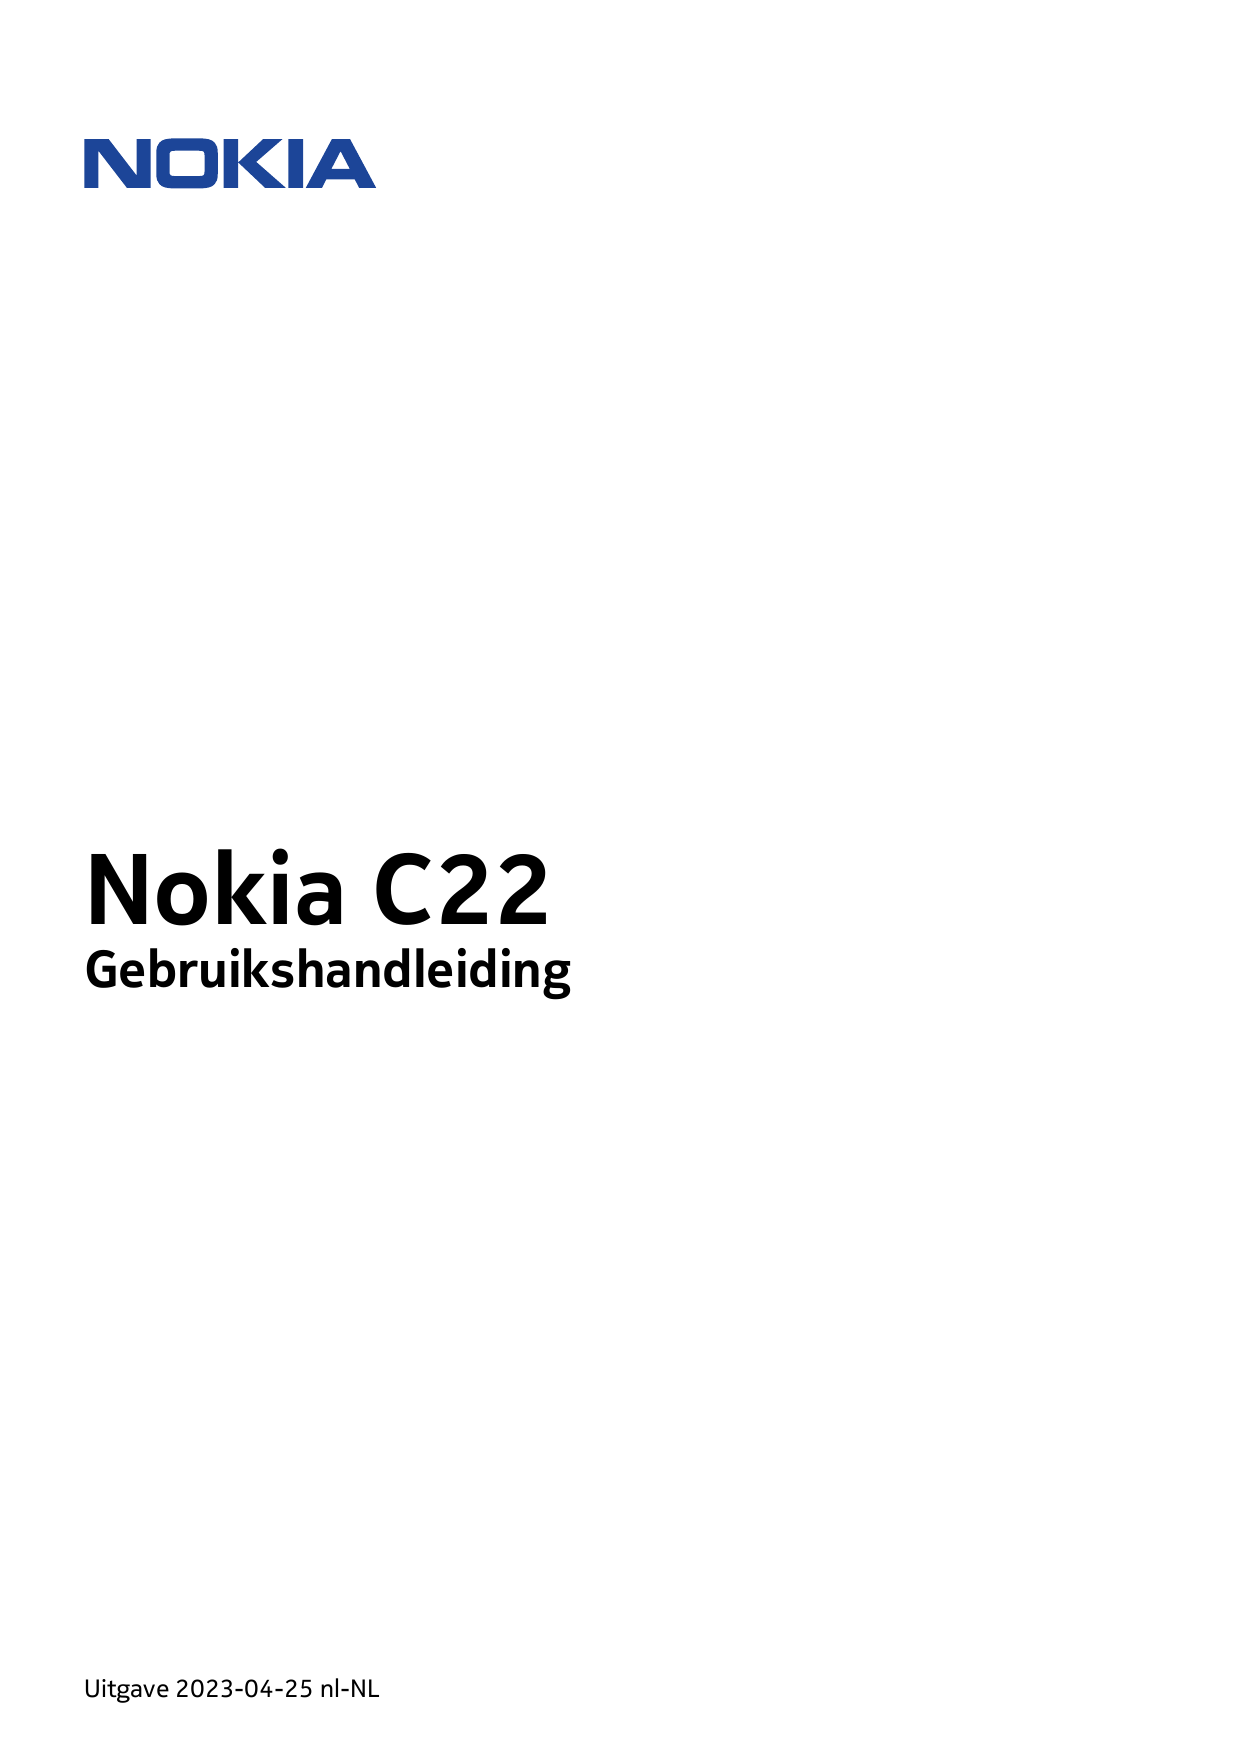 Nokia C22GebruikshandleidingUitgave 2023-04-25 nl-NL